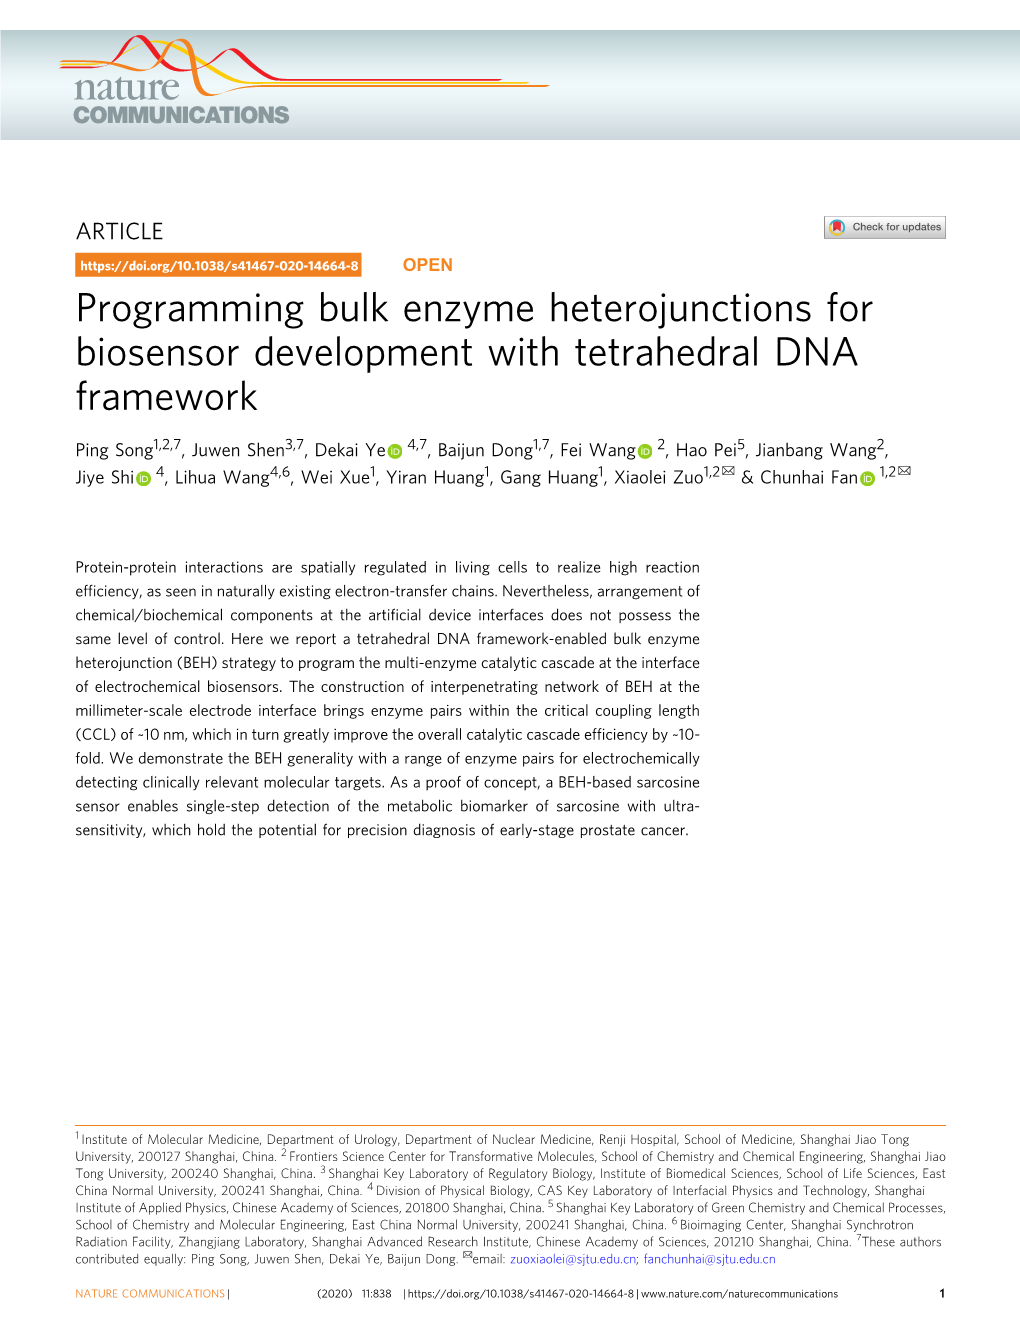 Programming Bulk Enzyme Heterojunctions for Biosensor Development with Tetrahedral DNA Framework